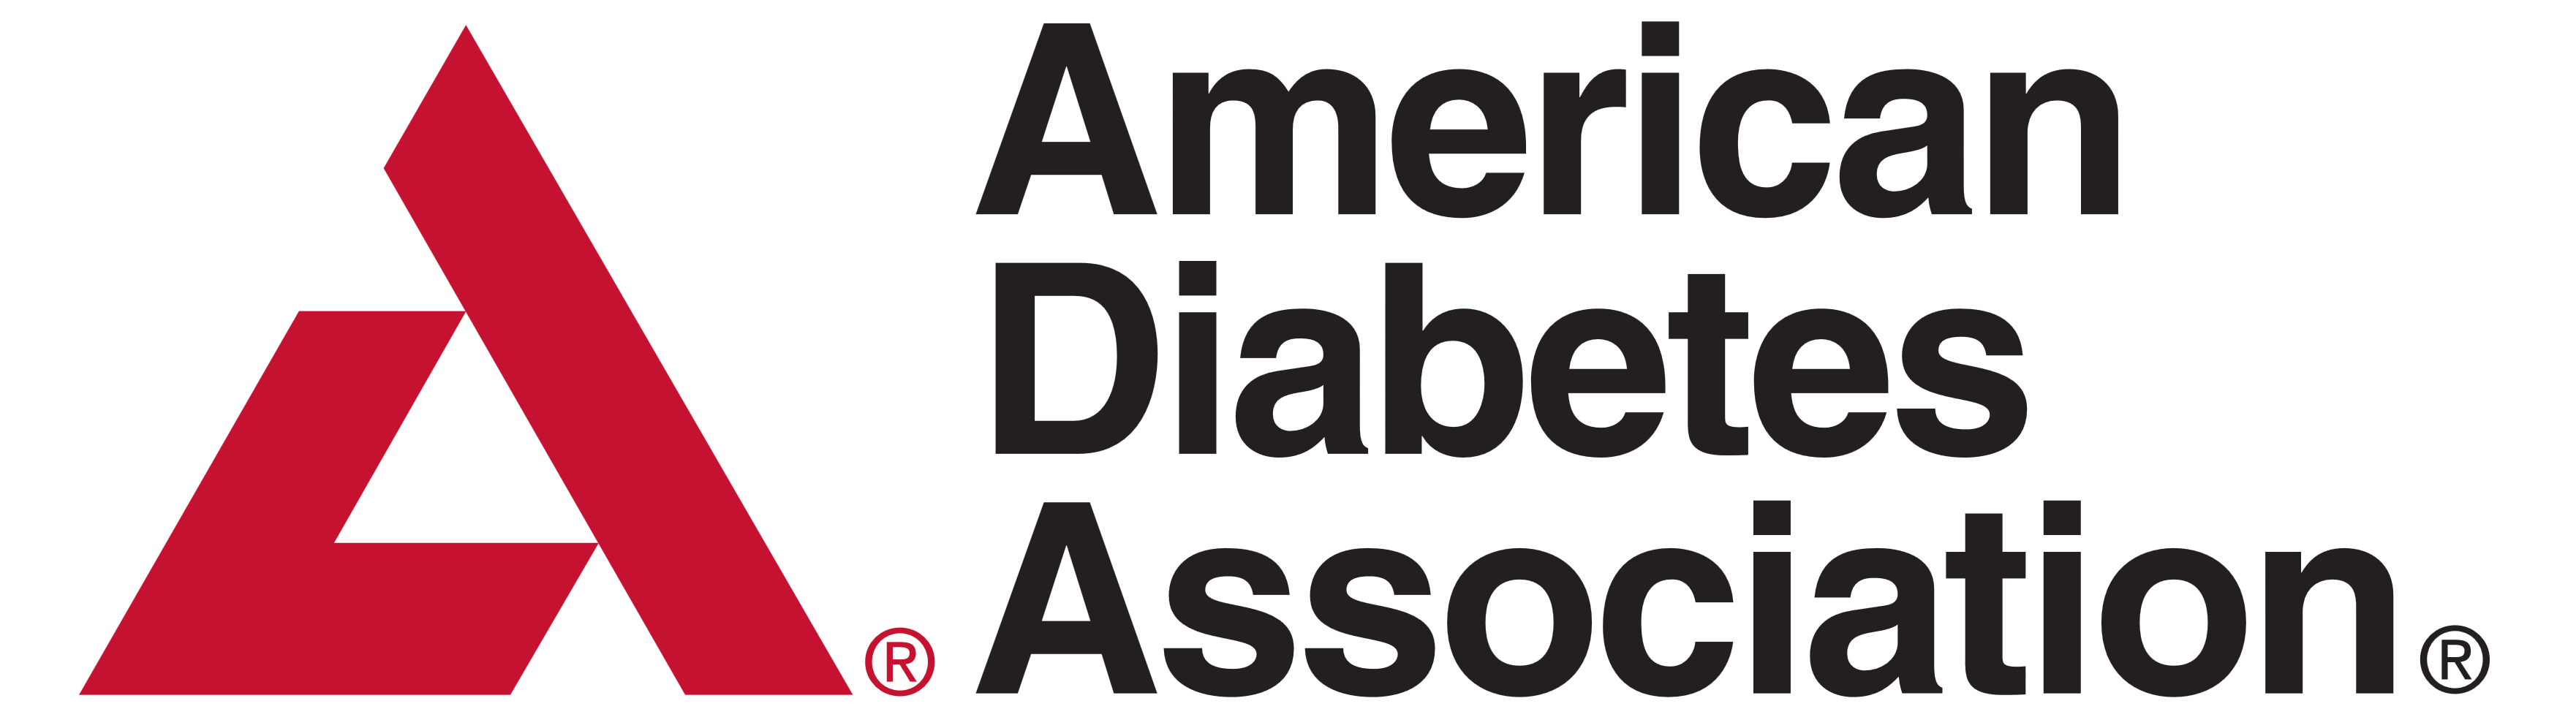 ADA - American Diabetes Association logo, logotype